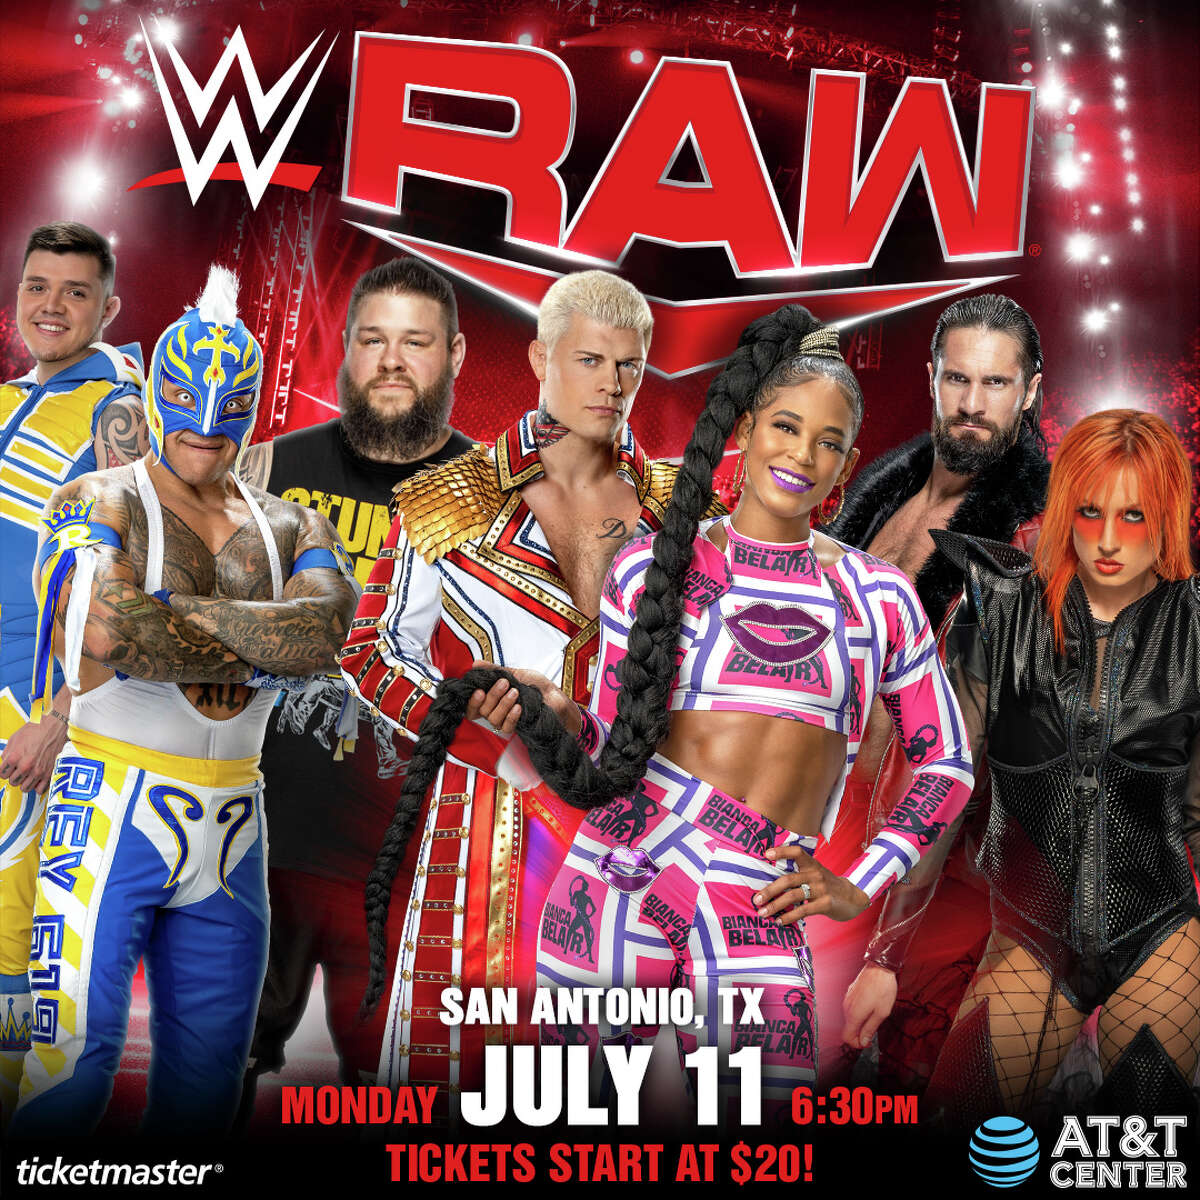 WWE brings Monday Night Raw to San Antonio's AT&T Center